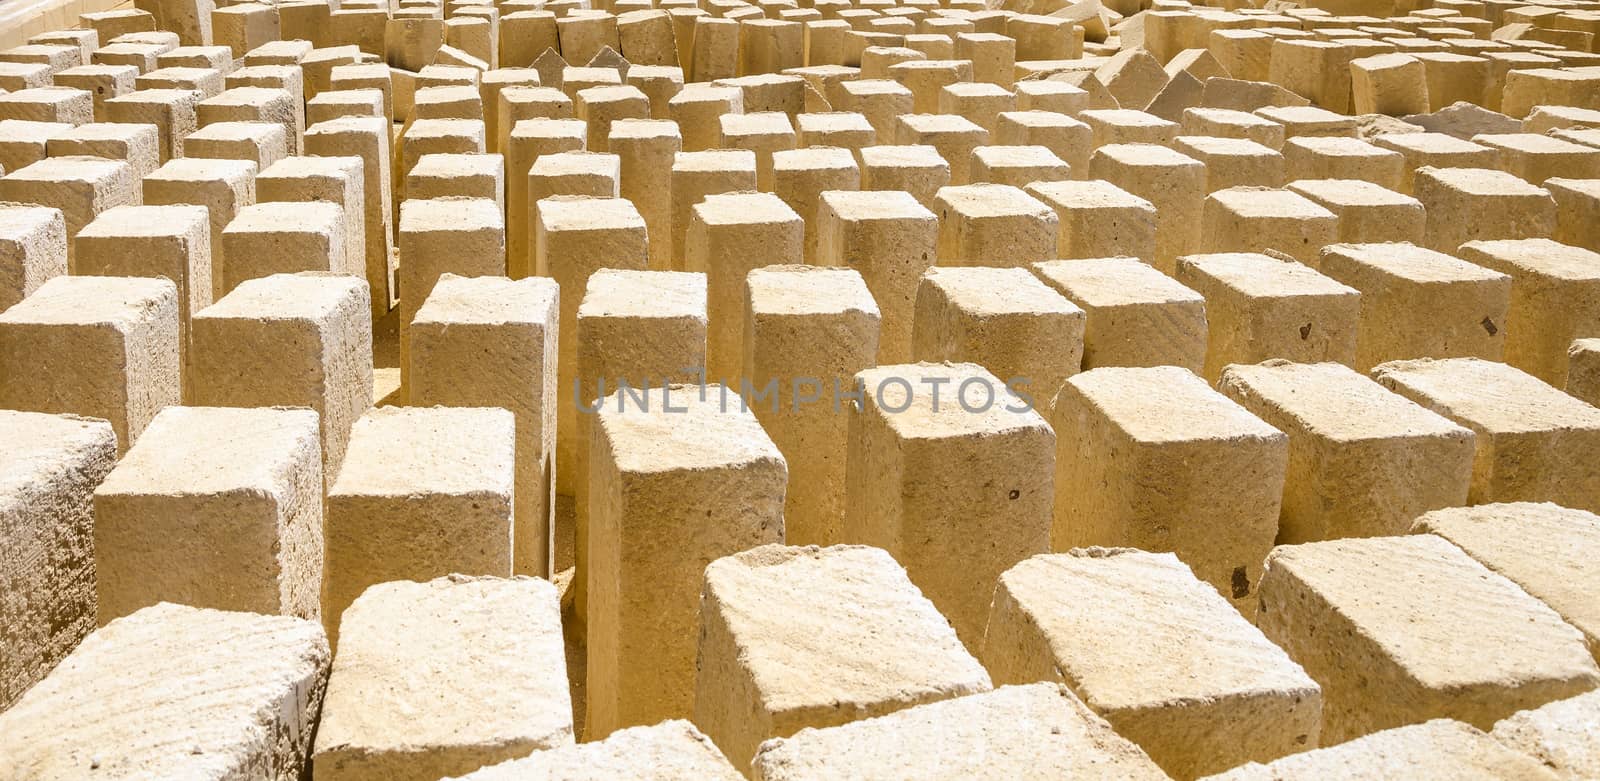 Tufa blocks in a stone quarry by alanstix64